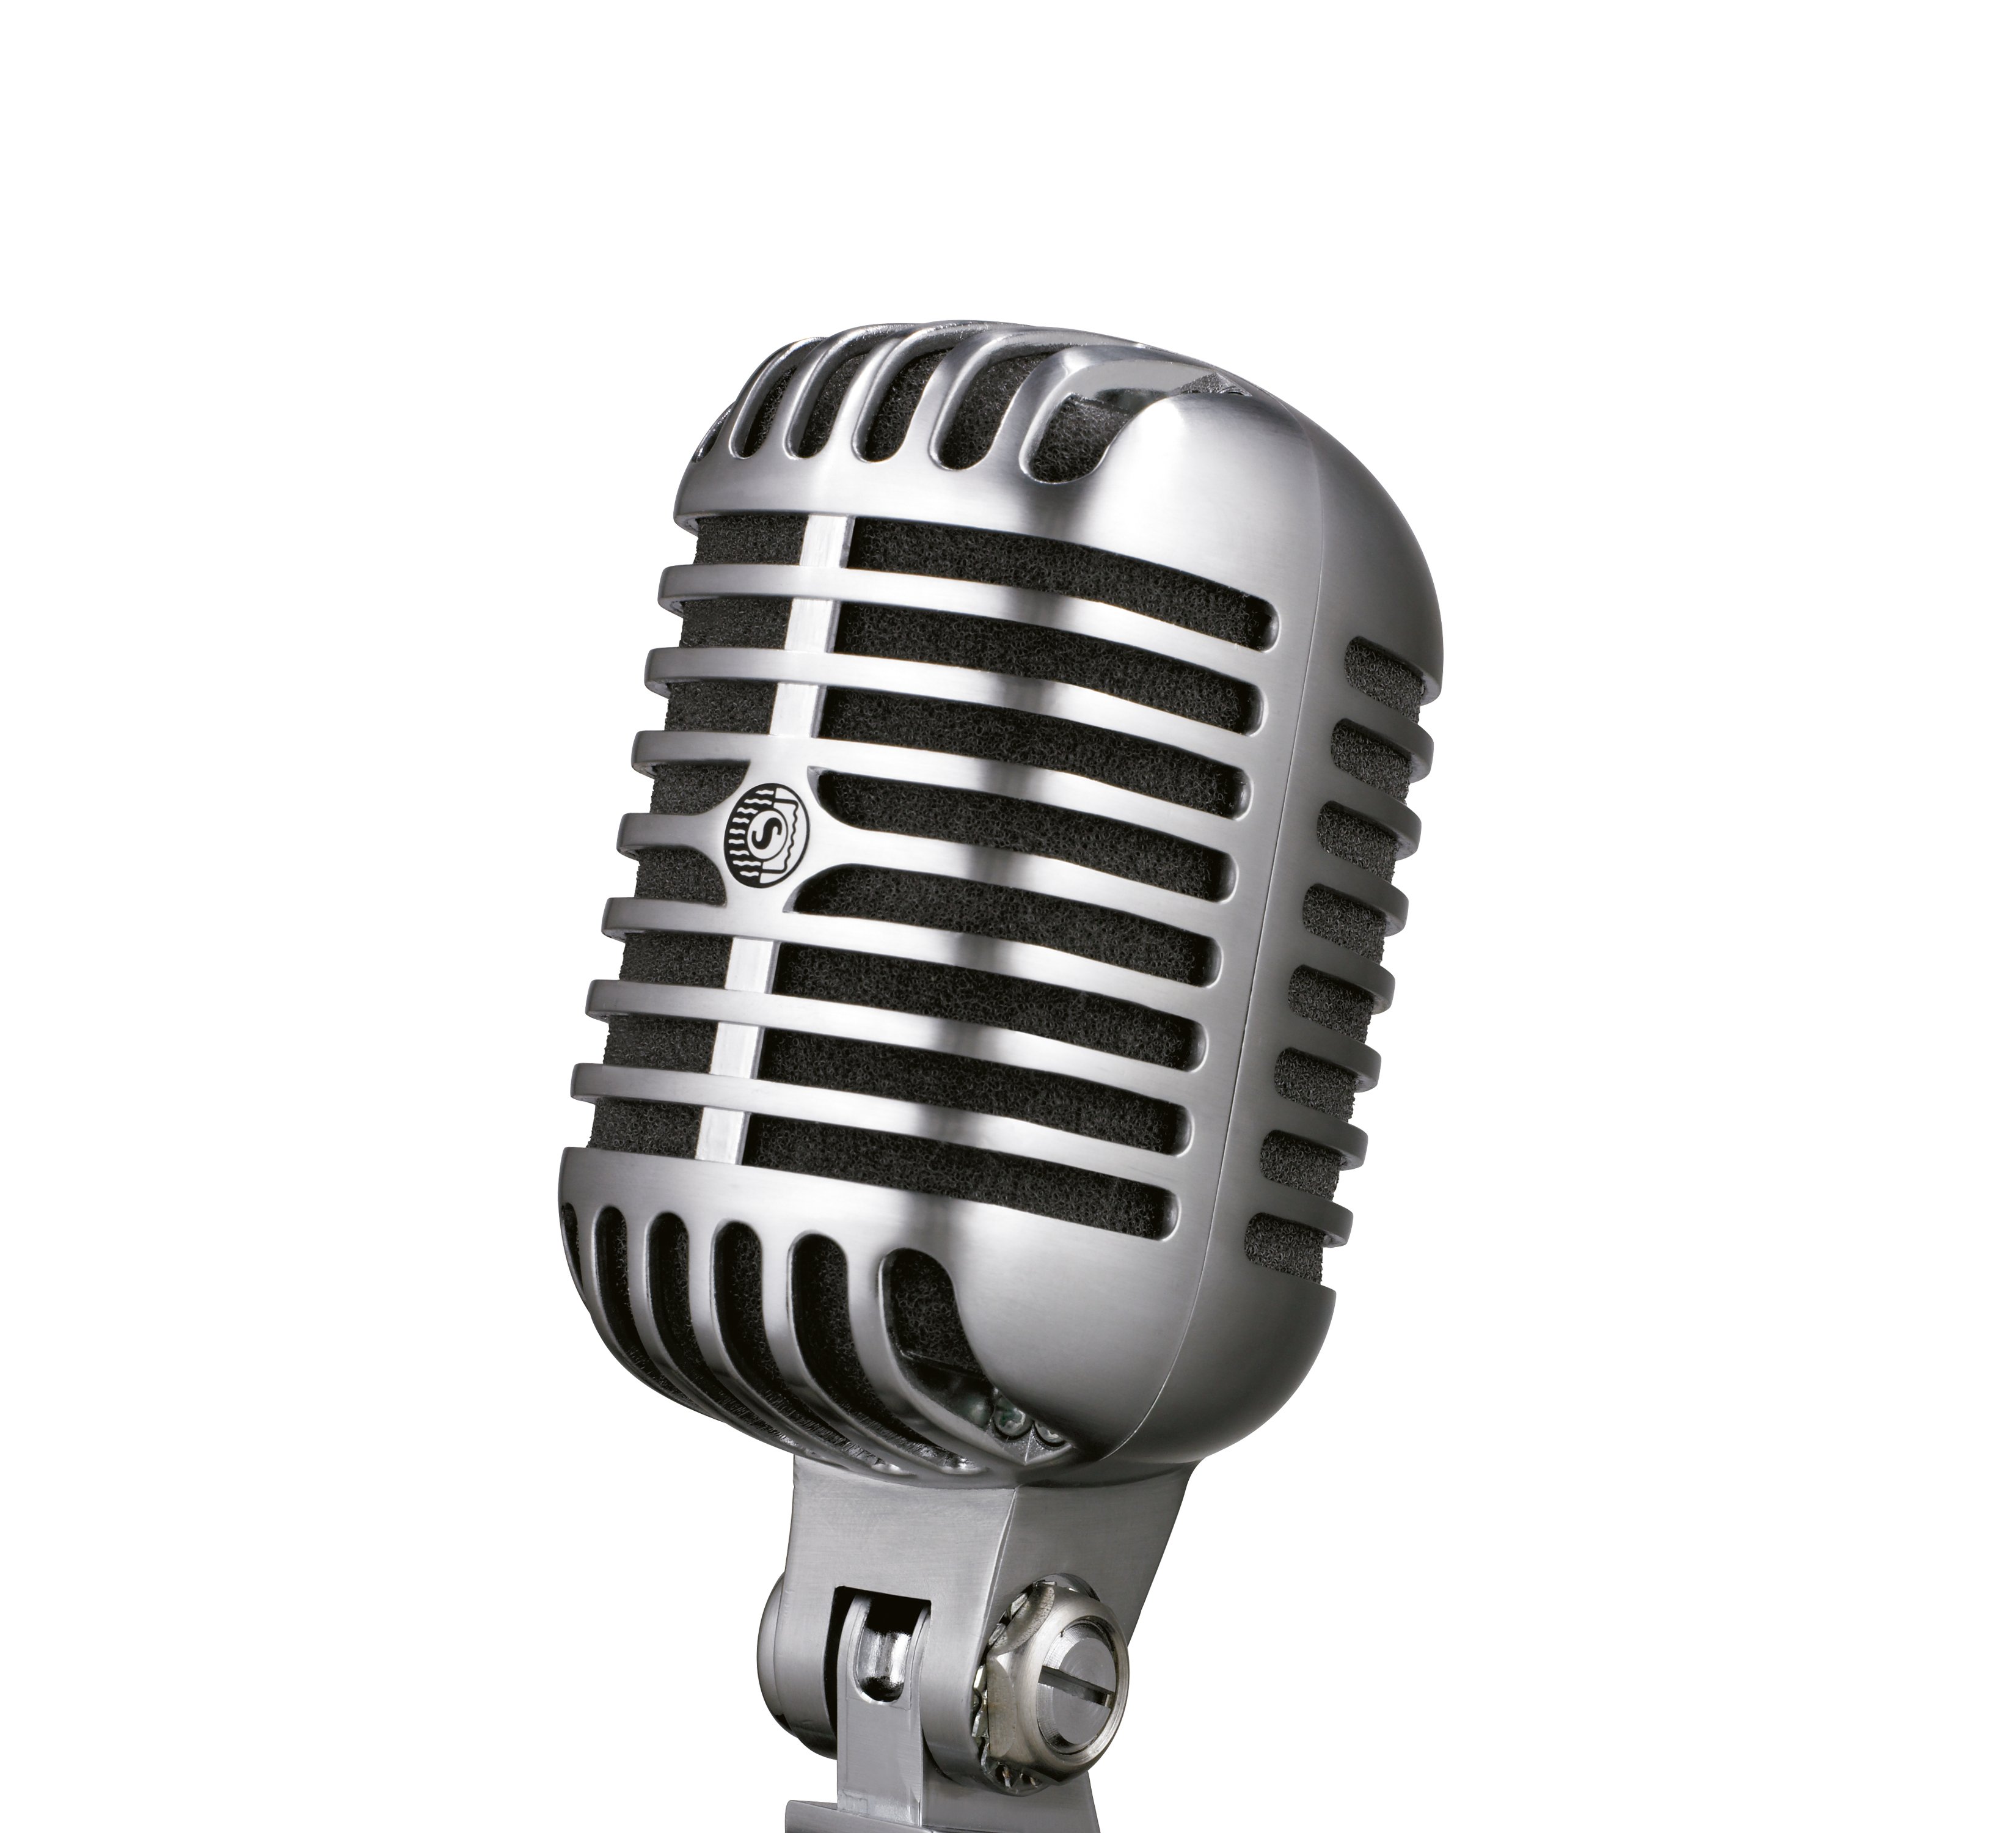 Shure, micrófono vocal dinámico con preamplificador integrado